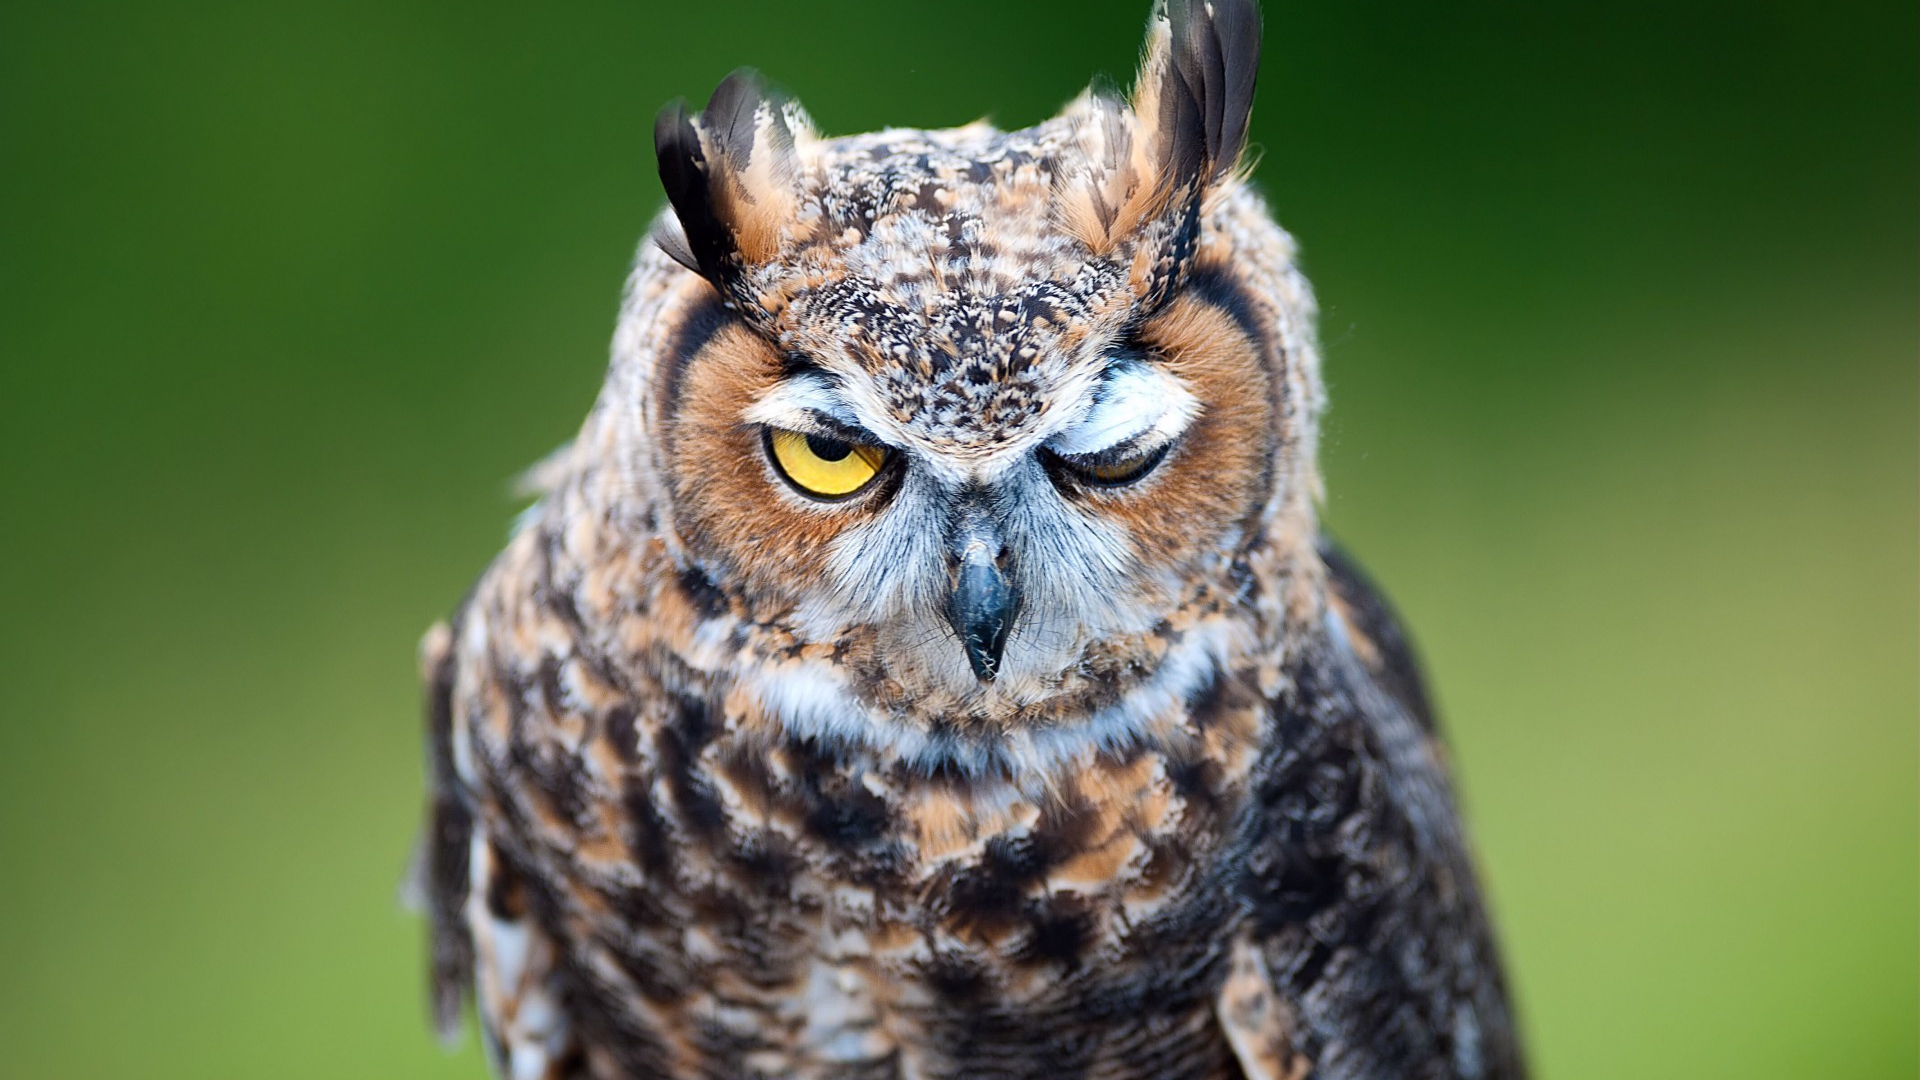 Wallpaper Owl Wink Bird Amusing - Owl Winking - HD Wallpaper 